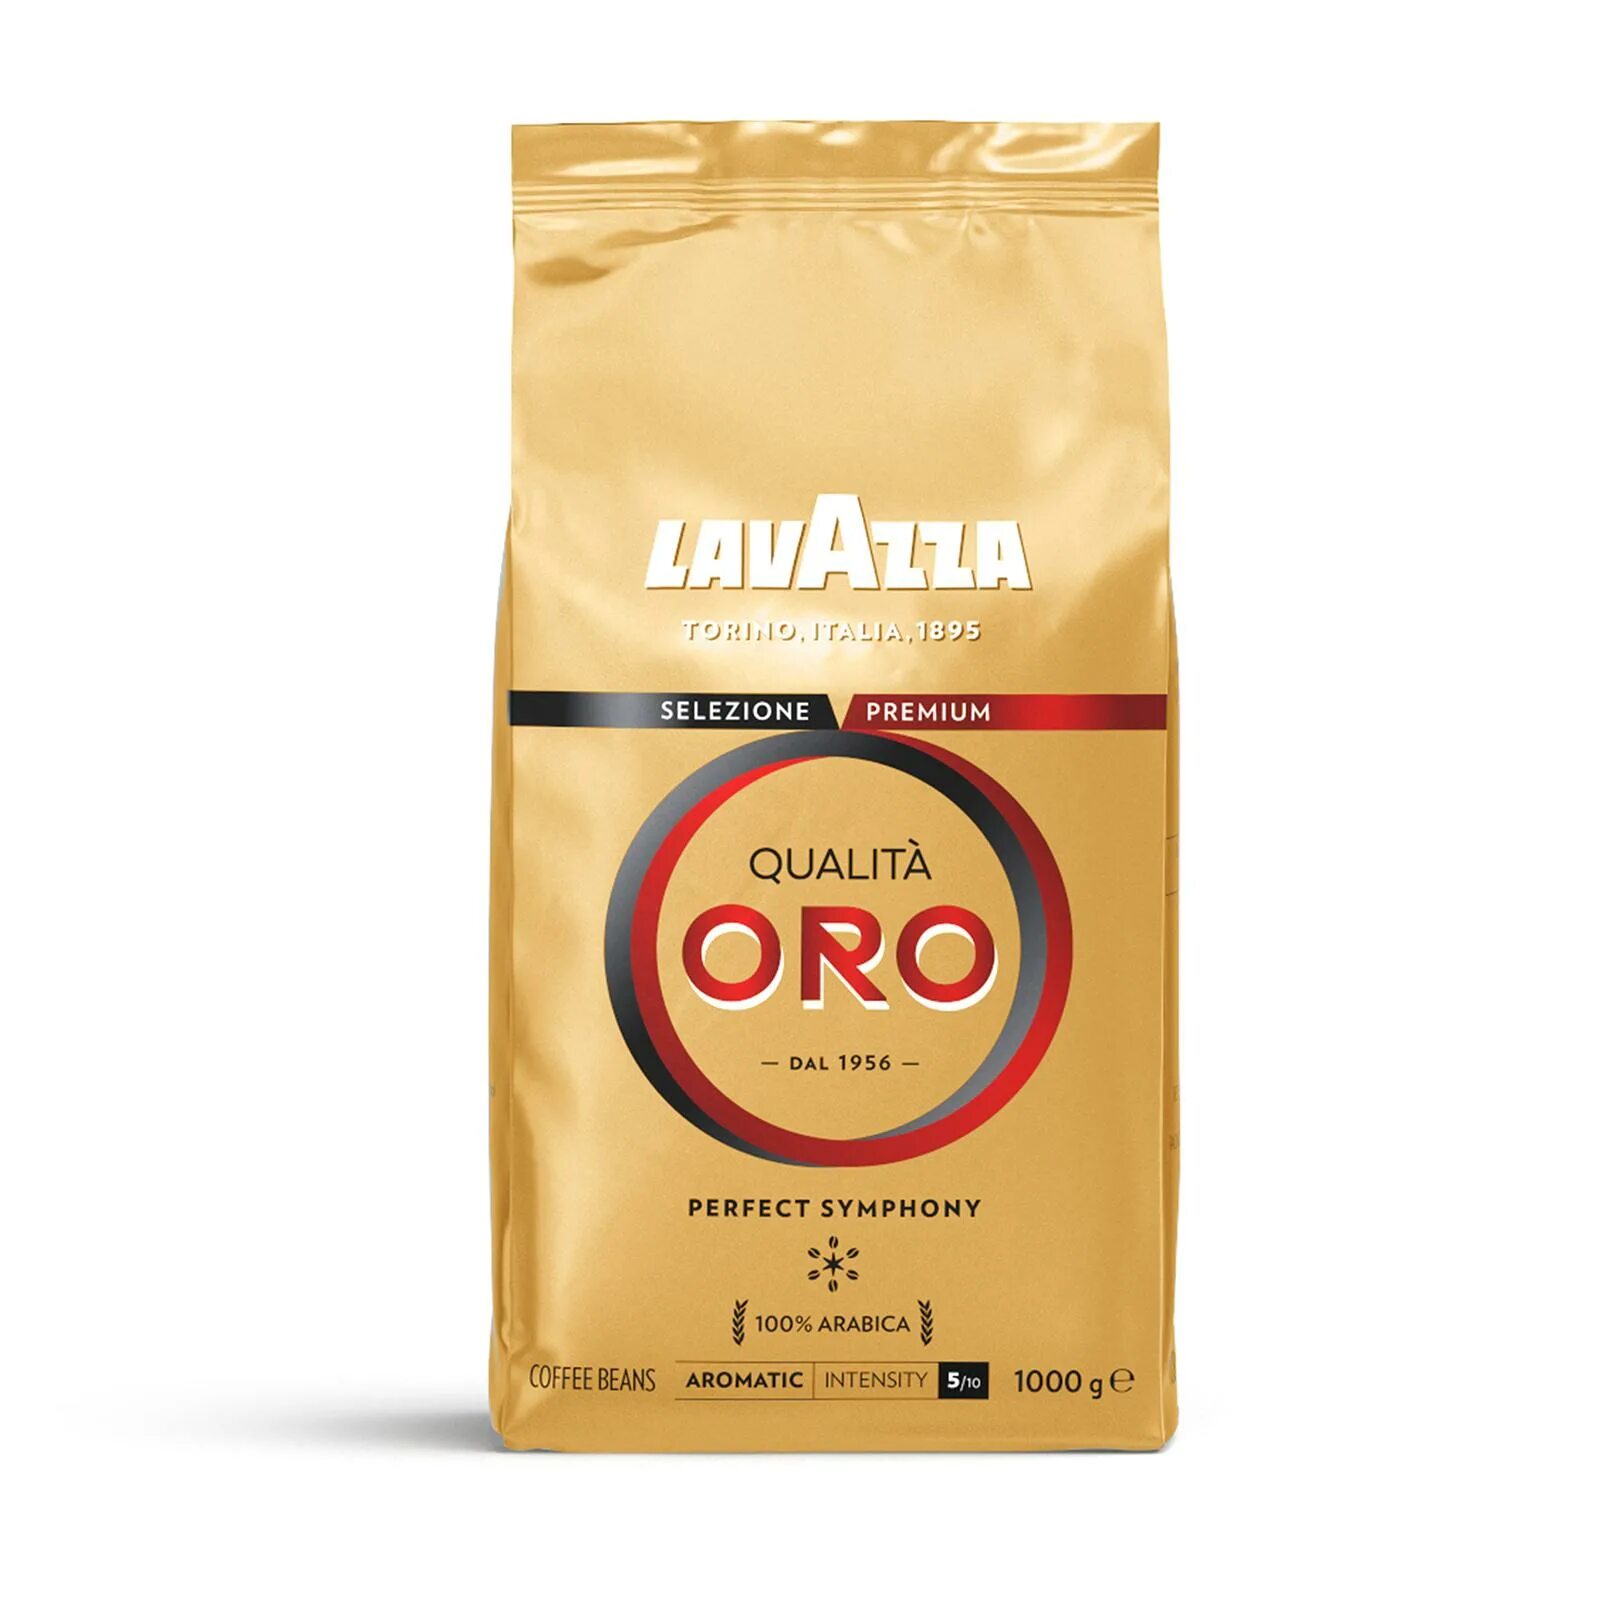 Lavazza qualita oro 1. Лавацца Оро 1 кг зерновой. Lavazza Oro 1 кг как должны выглядеть зерна. Лавацца Оро описание.